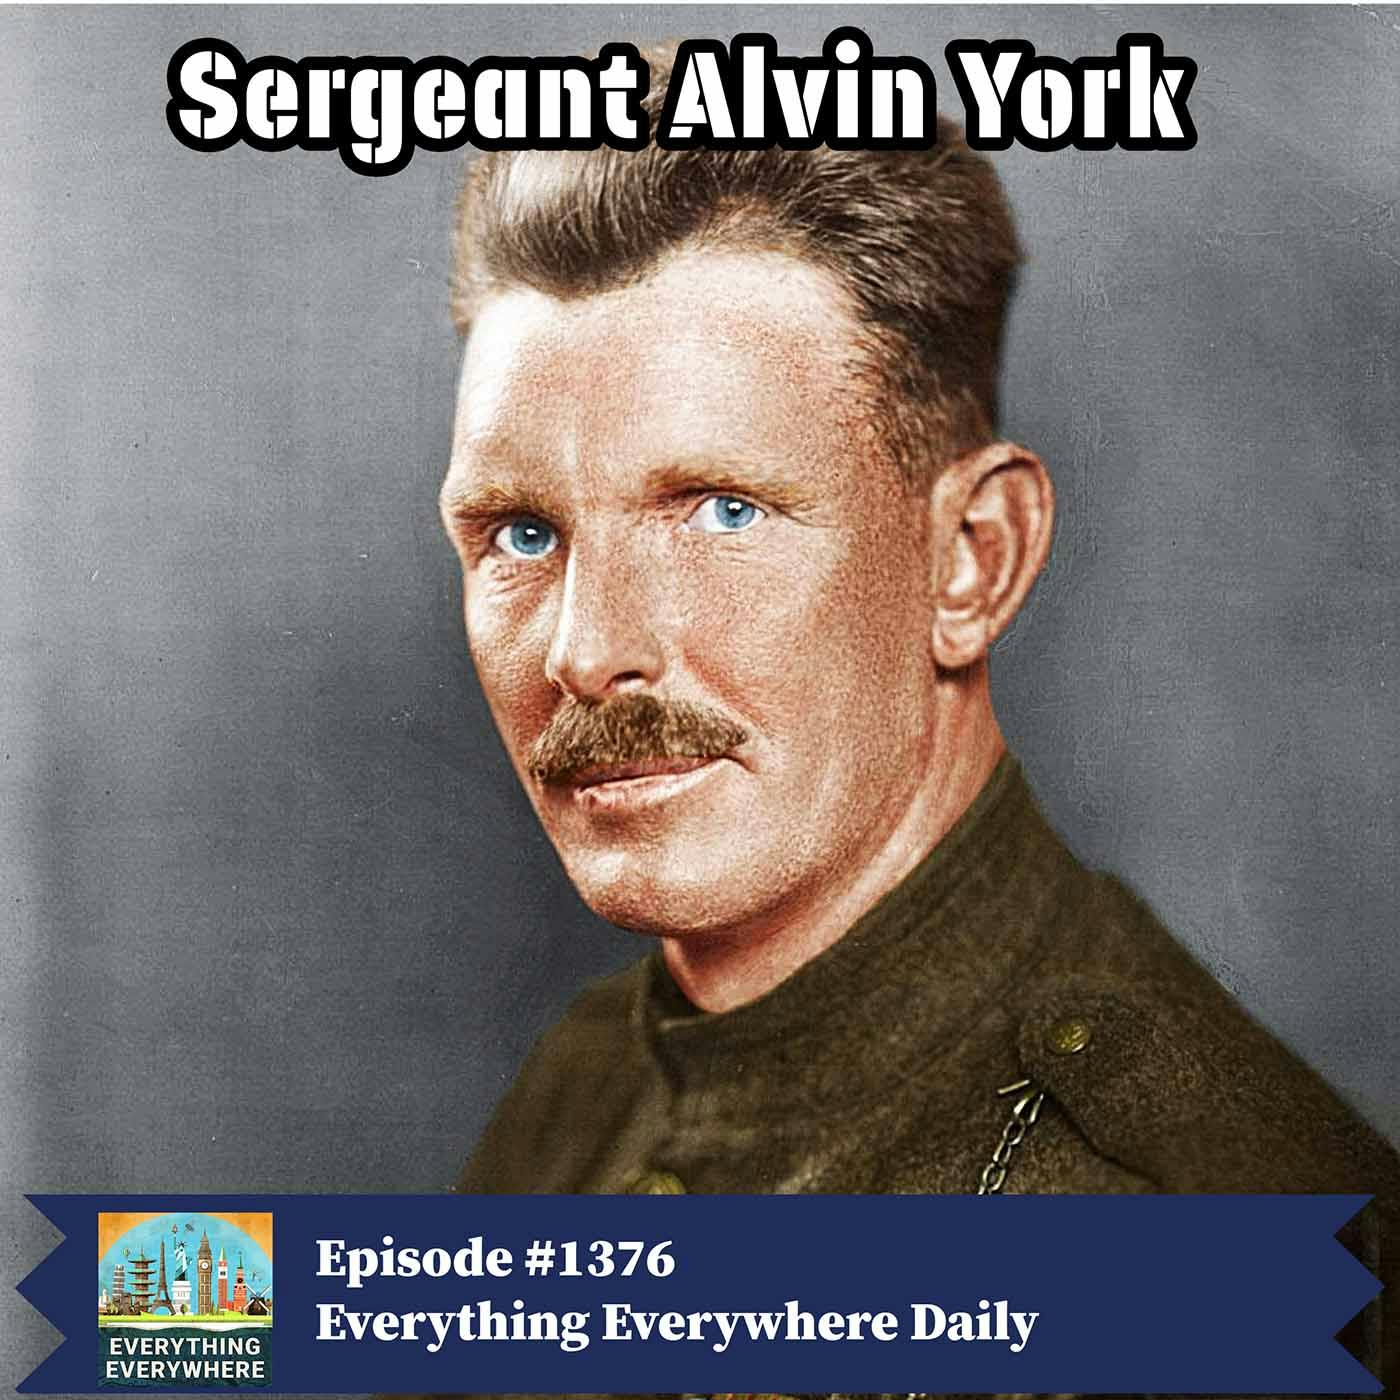 Sergeant Alvin York